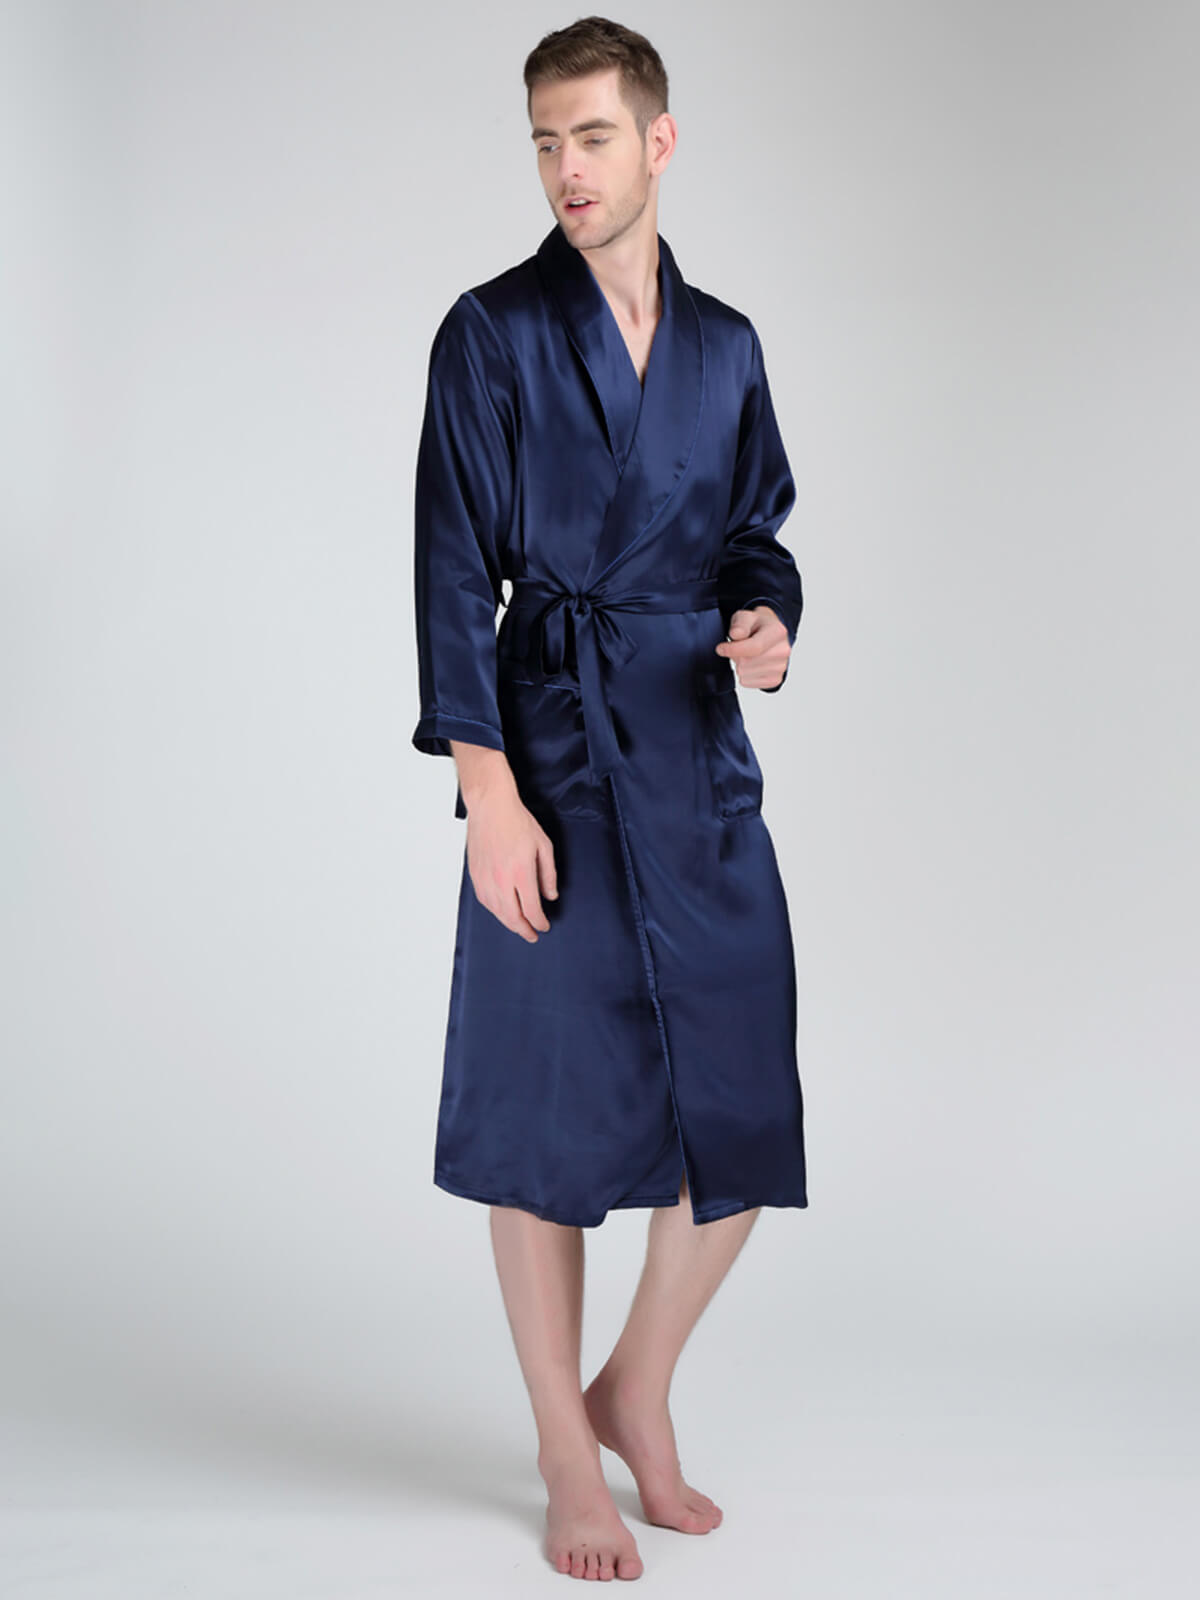 19 Momme Luxurious Silk Robe For Couples, RachelSilk